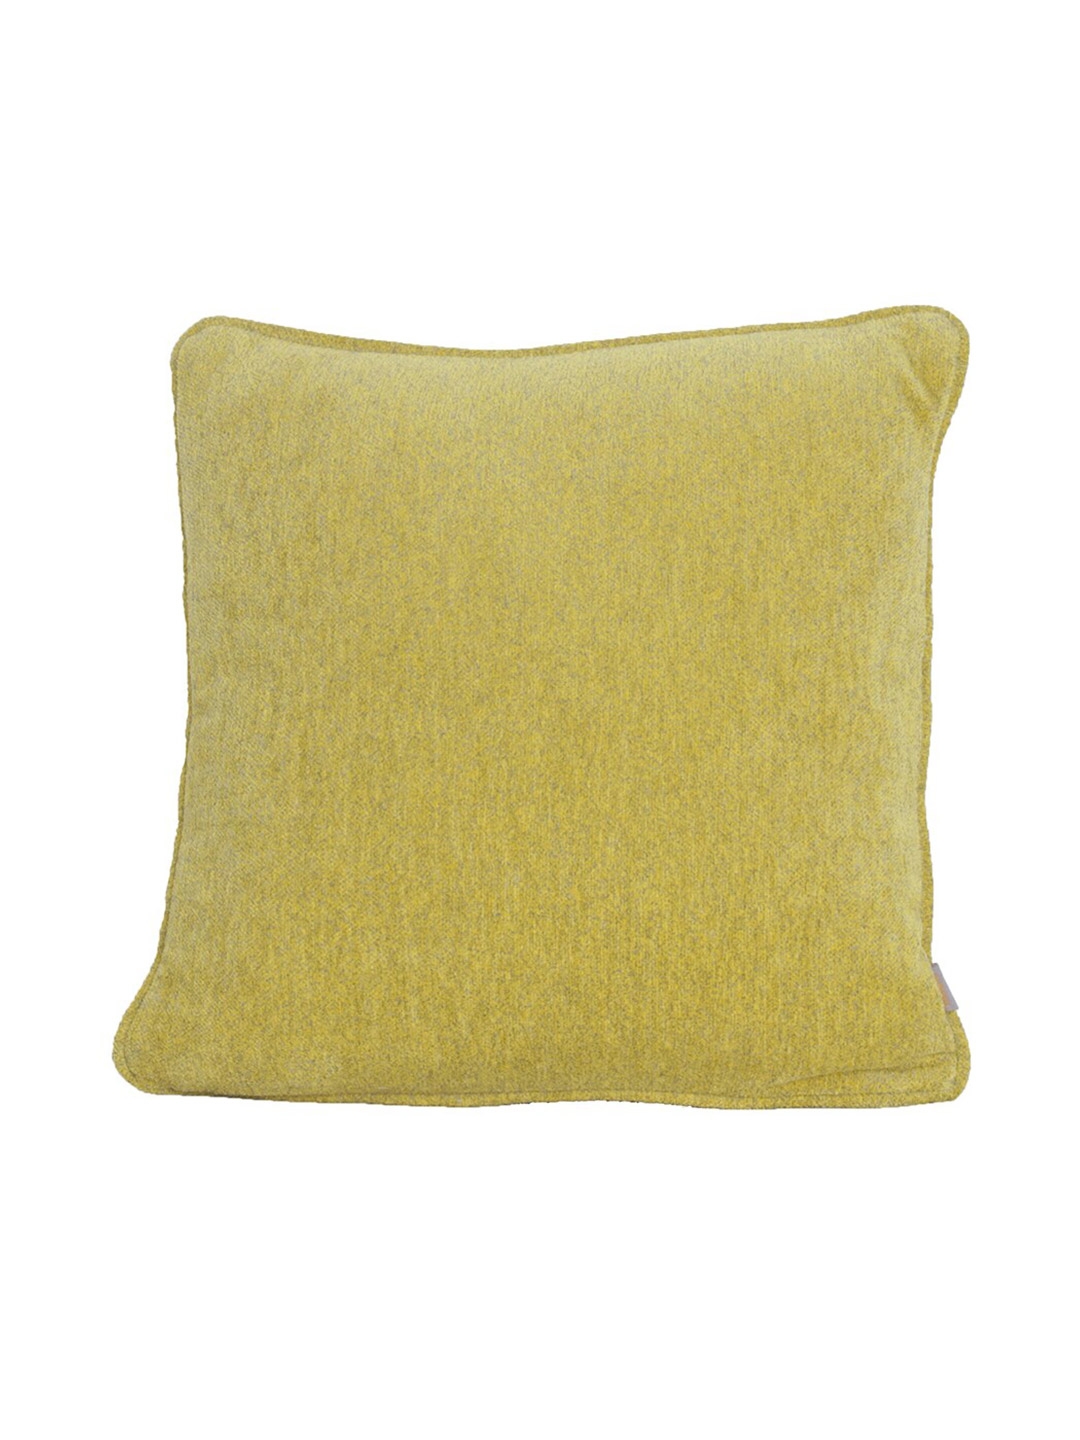 MASPAR Yellow Square Cushion Covers